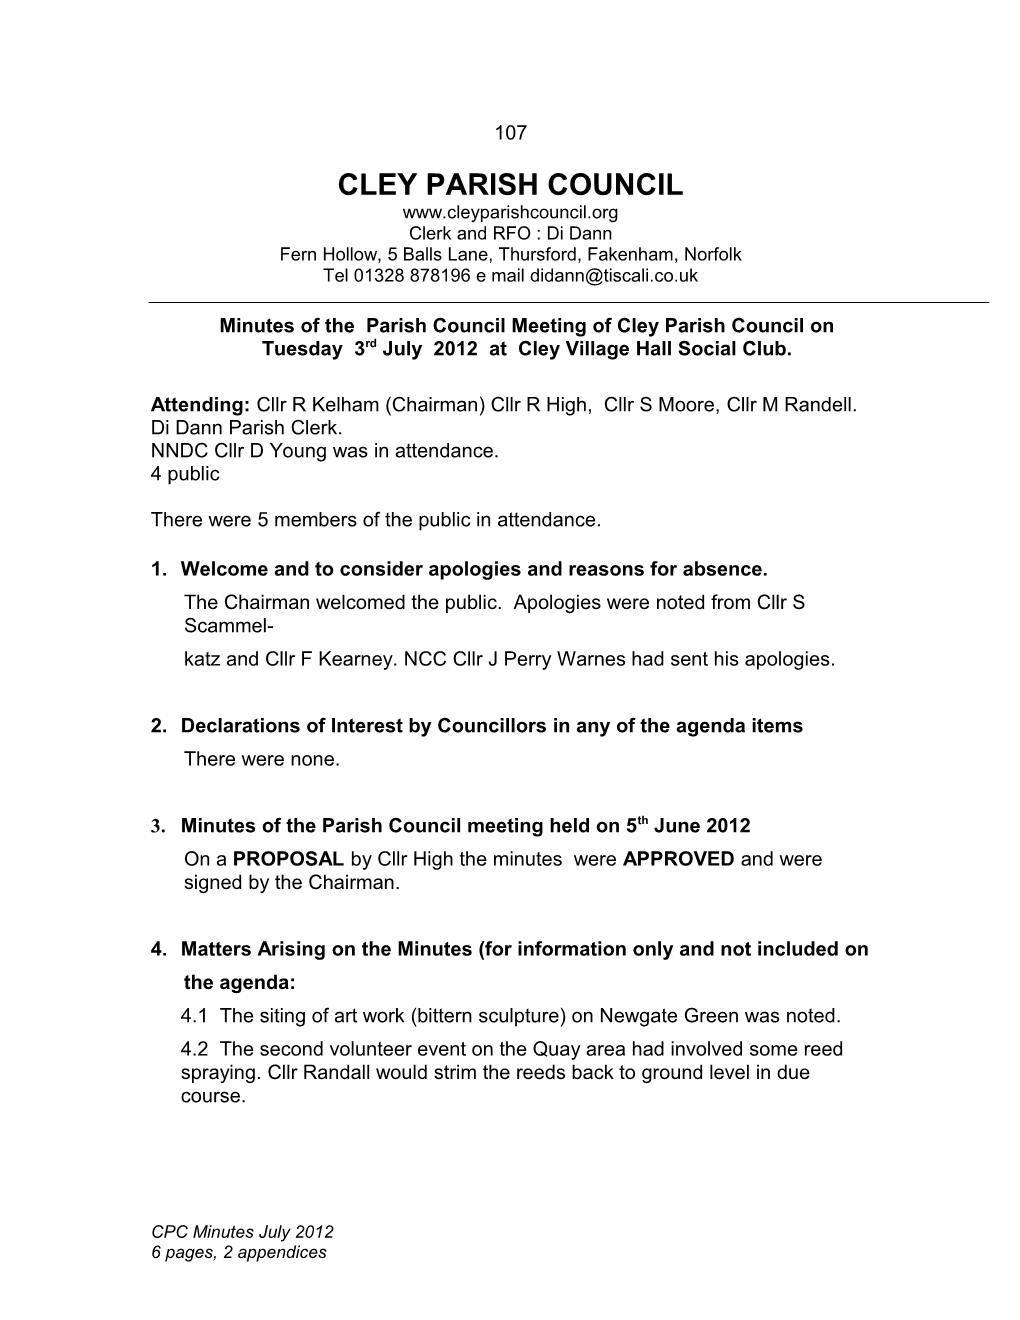 Cley Parish Council